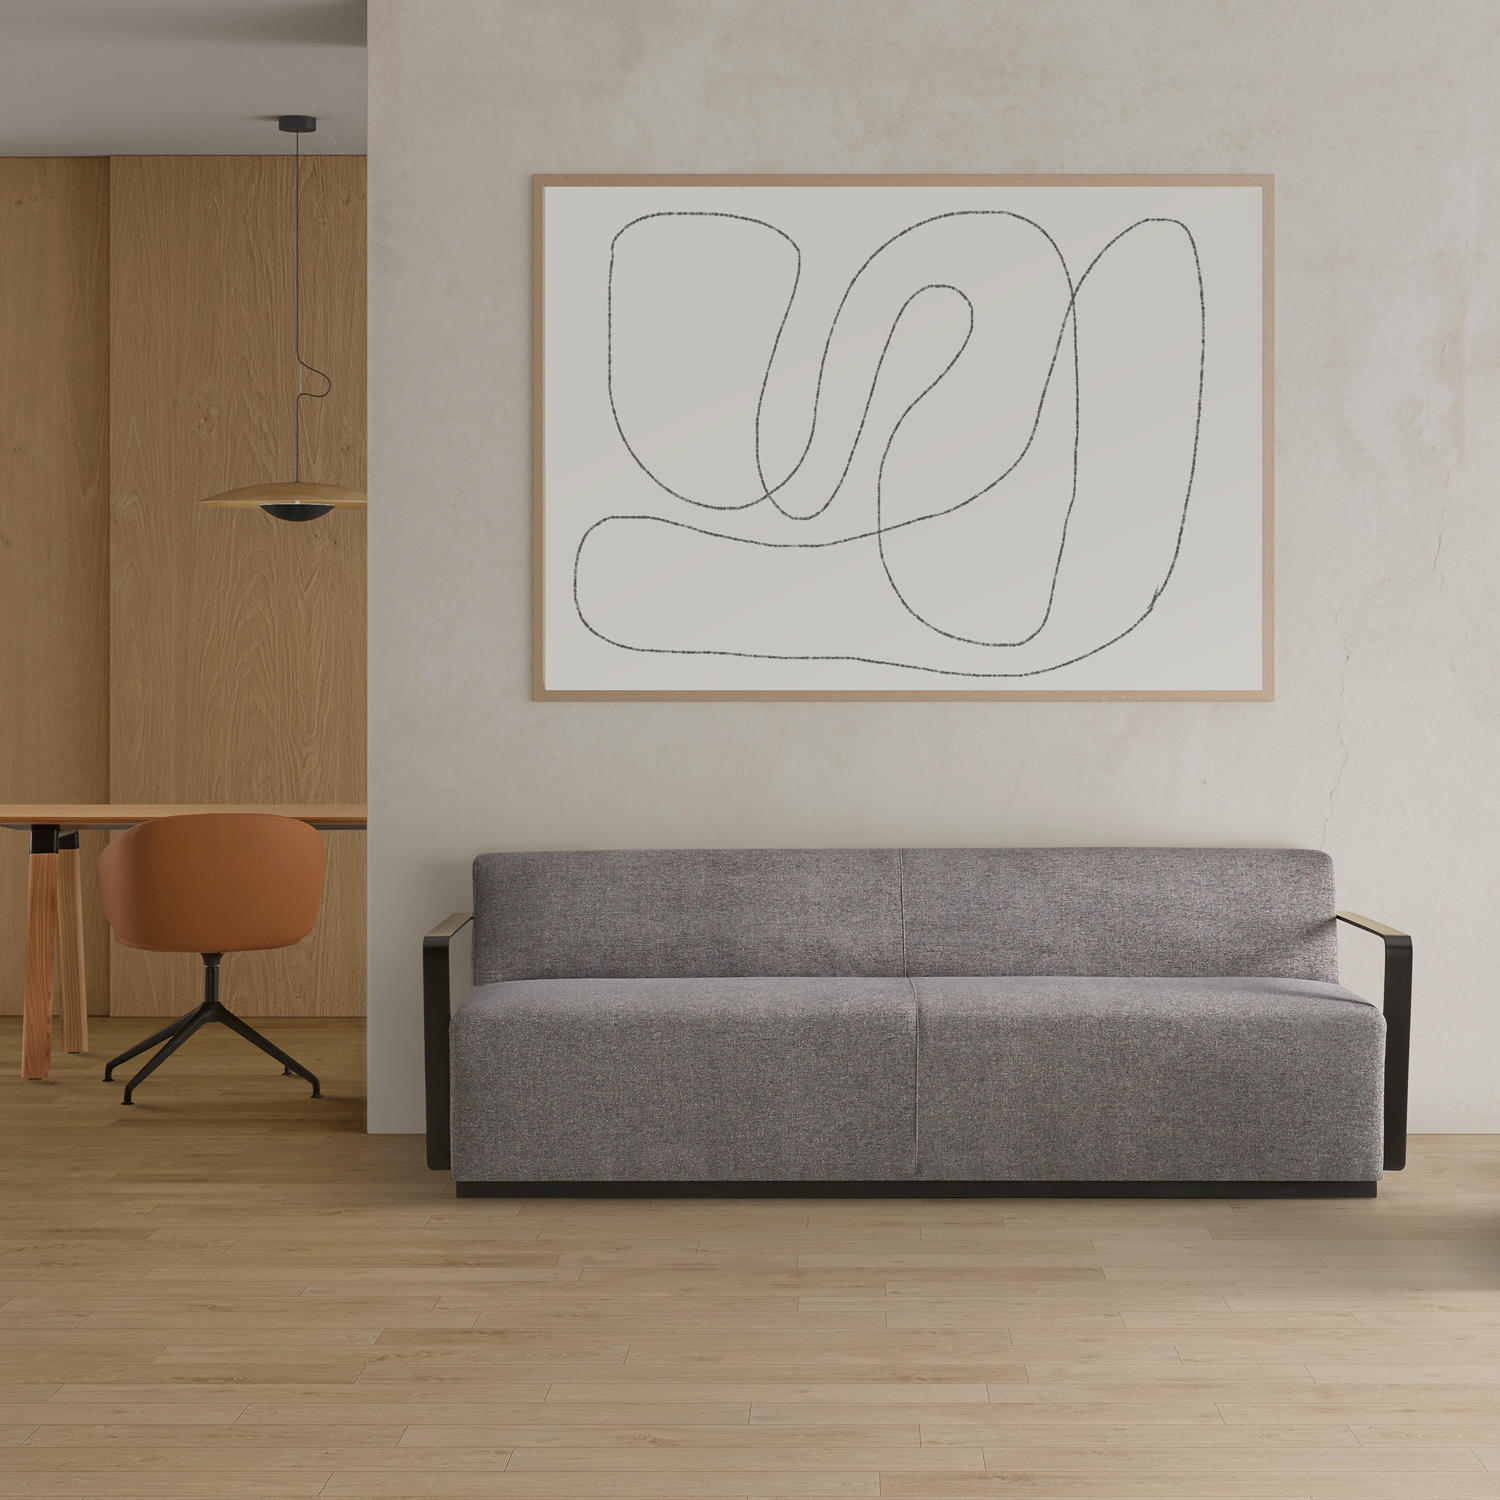 PAU Modular Sofas by Inclass